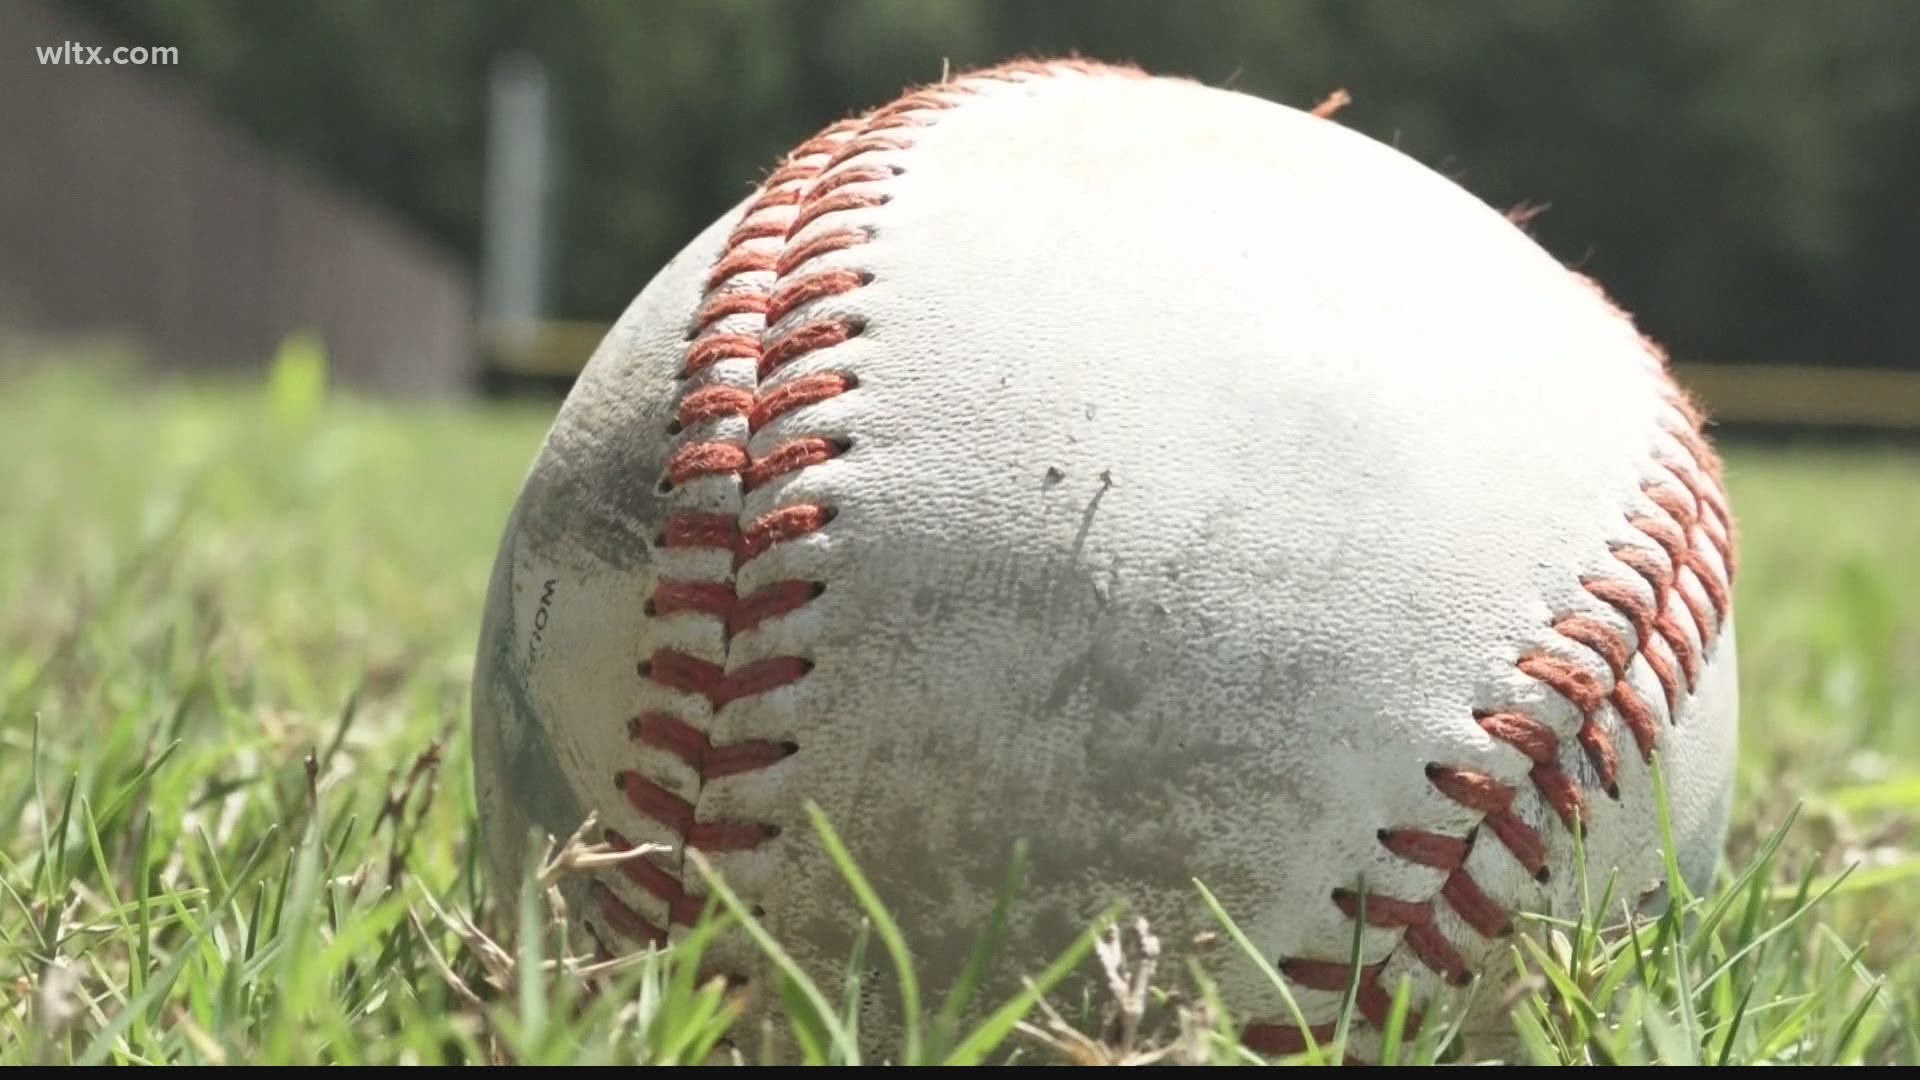 Dixie Youth Baseball State Tournament to be held in Orangeburg